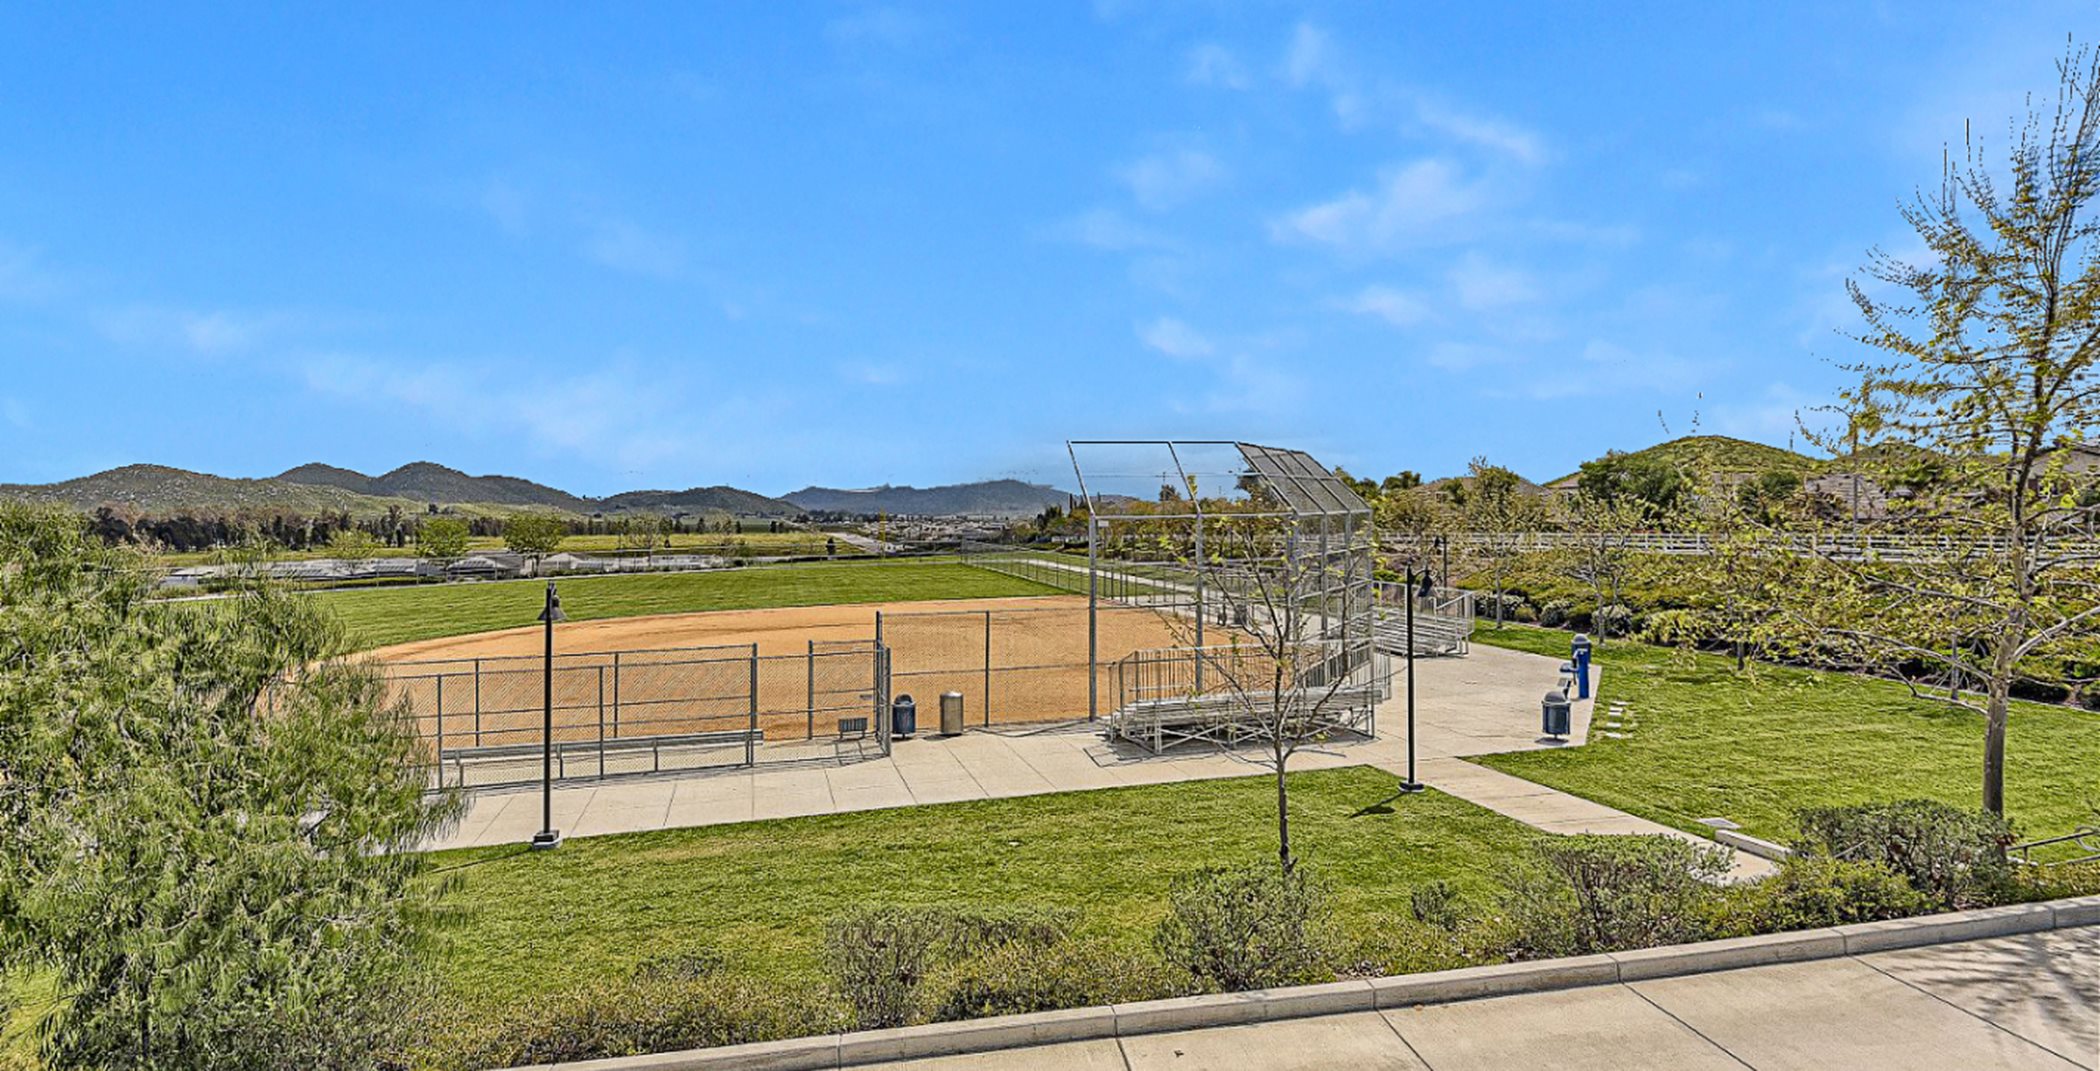 Lago Vista Sports Park baseball field